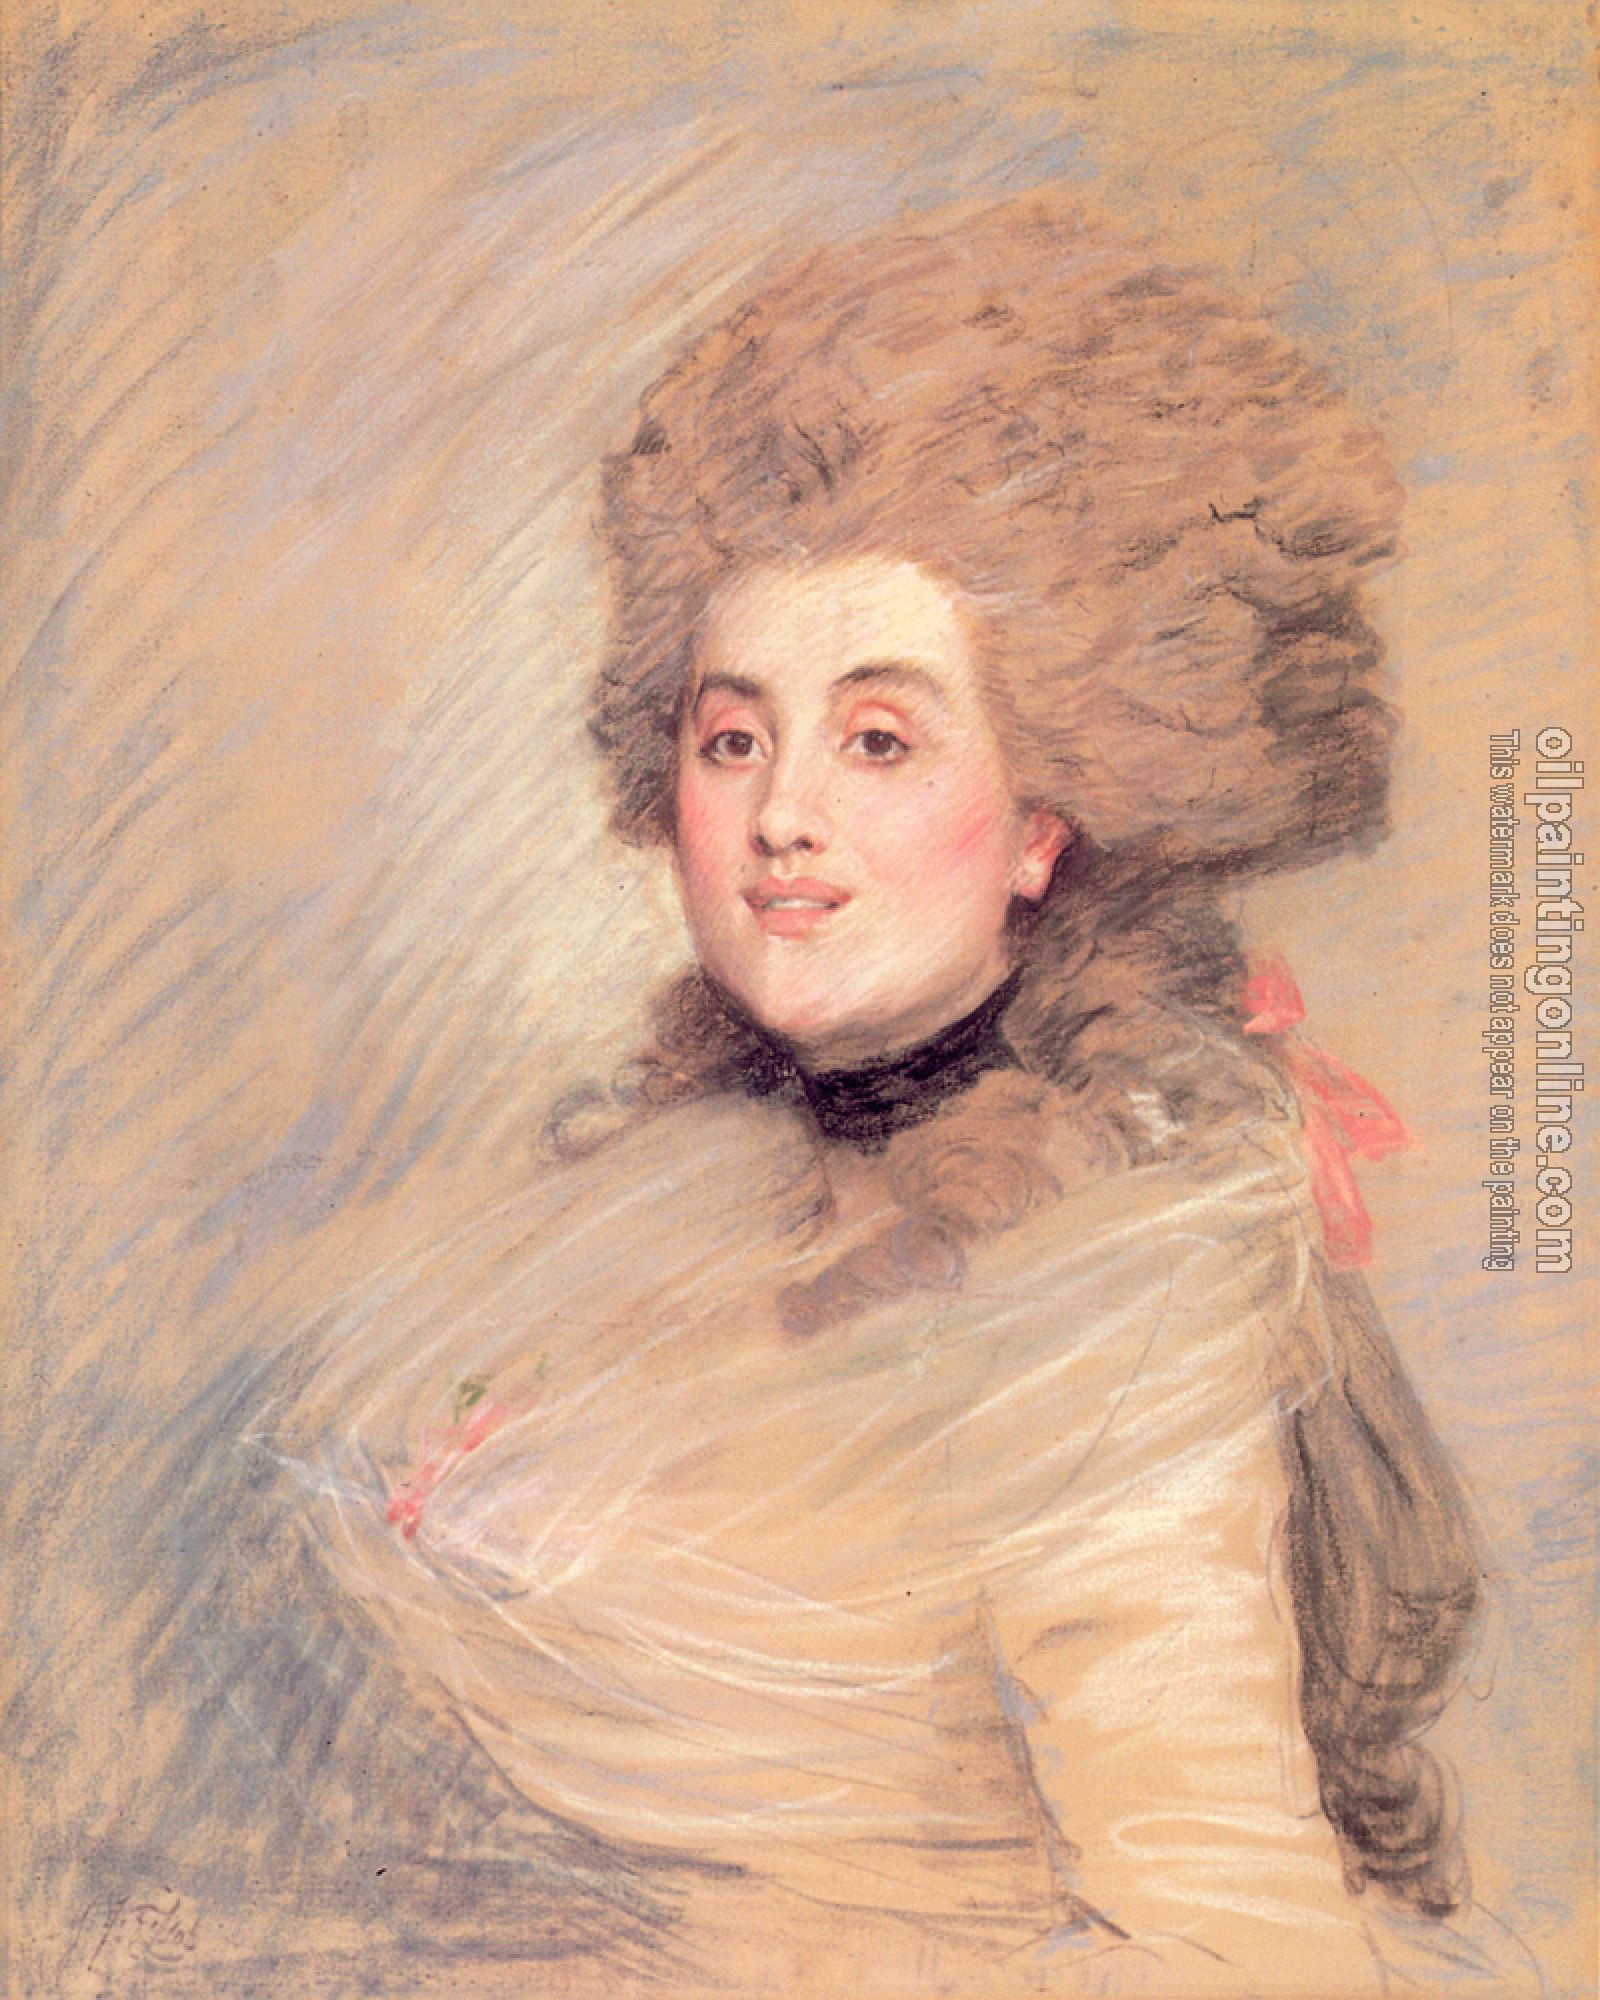 Tissot, James - Portrait of an Actress in 18thC Dress